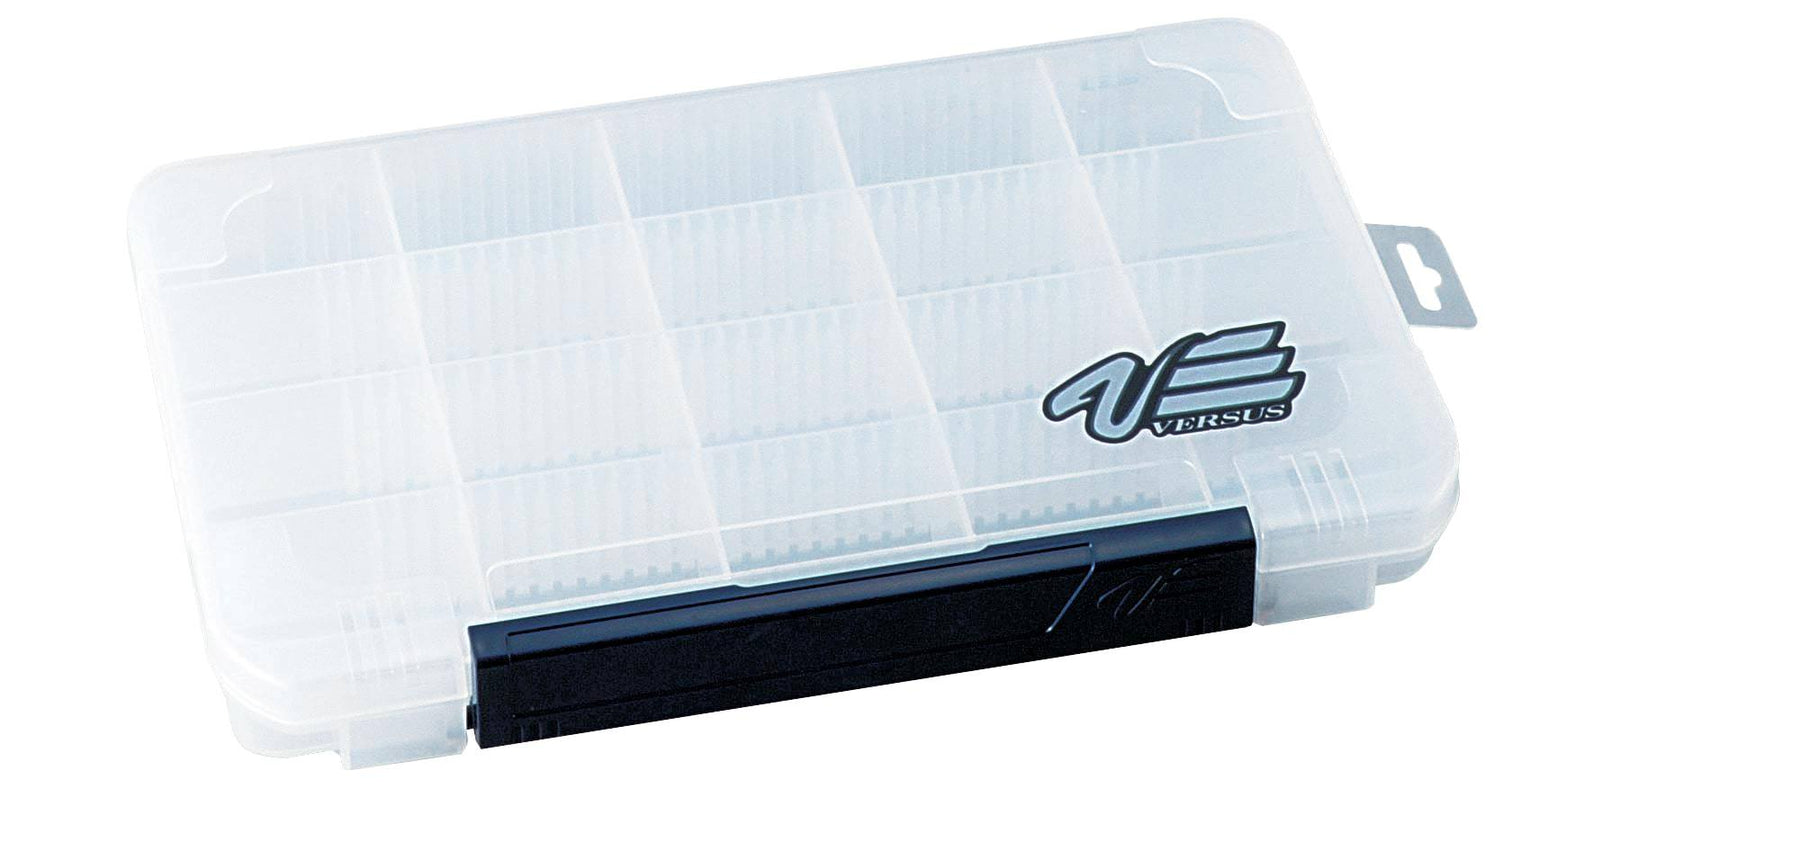 Versus VS 3043ND2 Tackle Storage Boxes